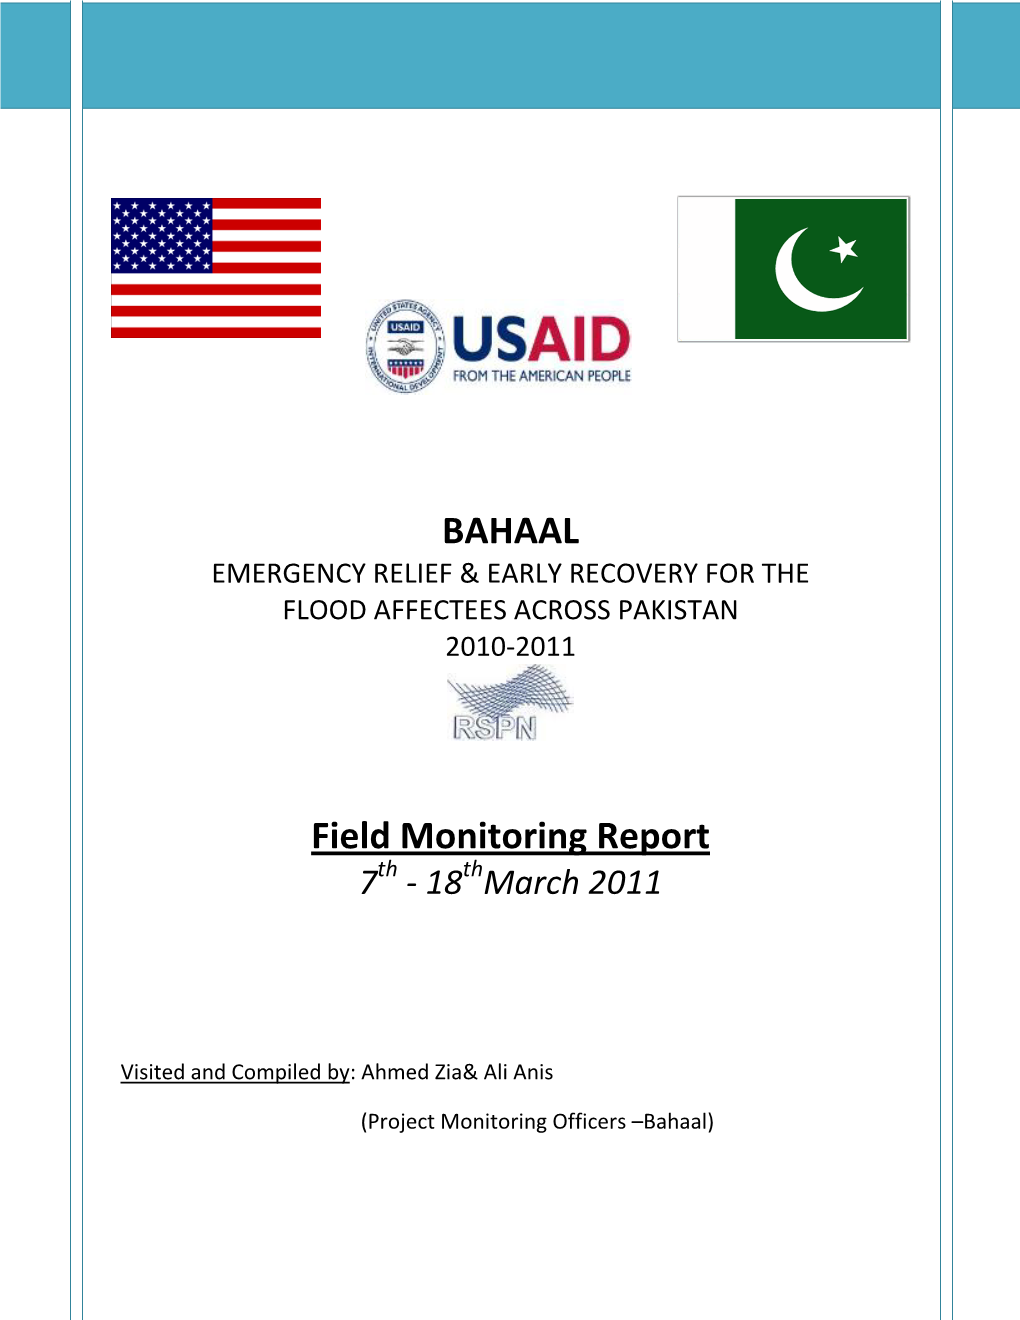 Field Monitoring Report 4